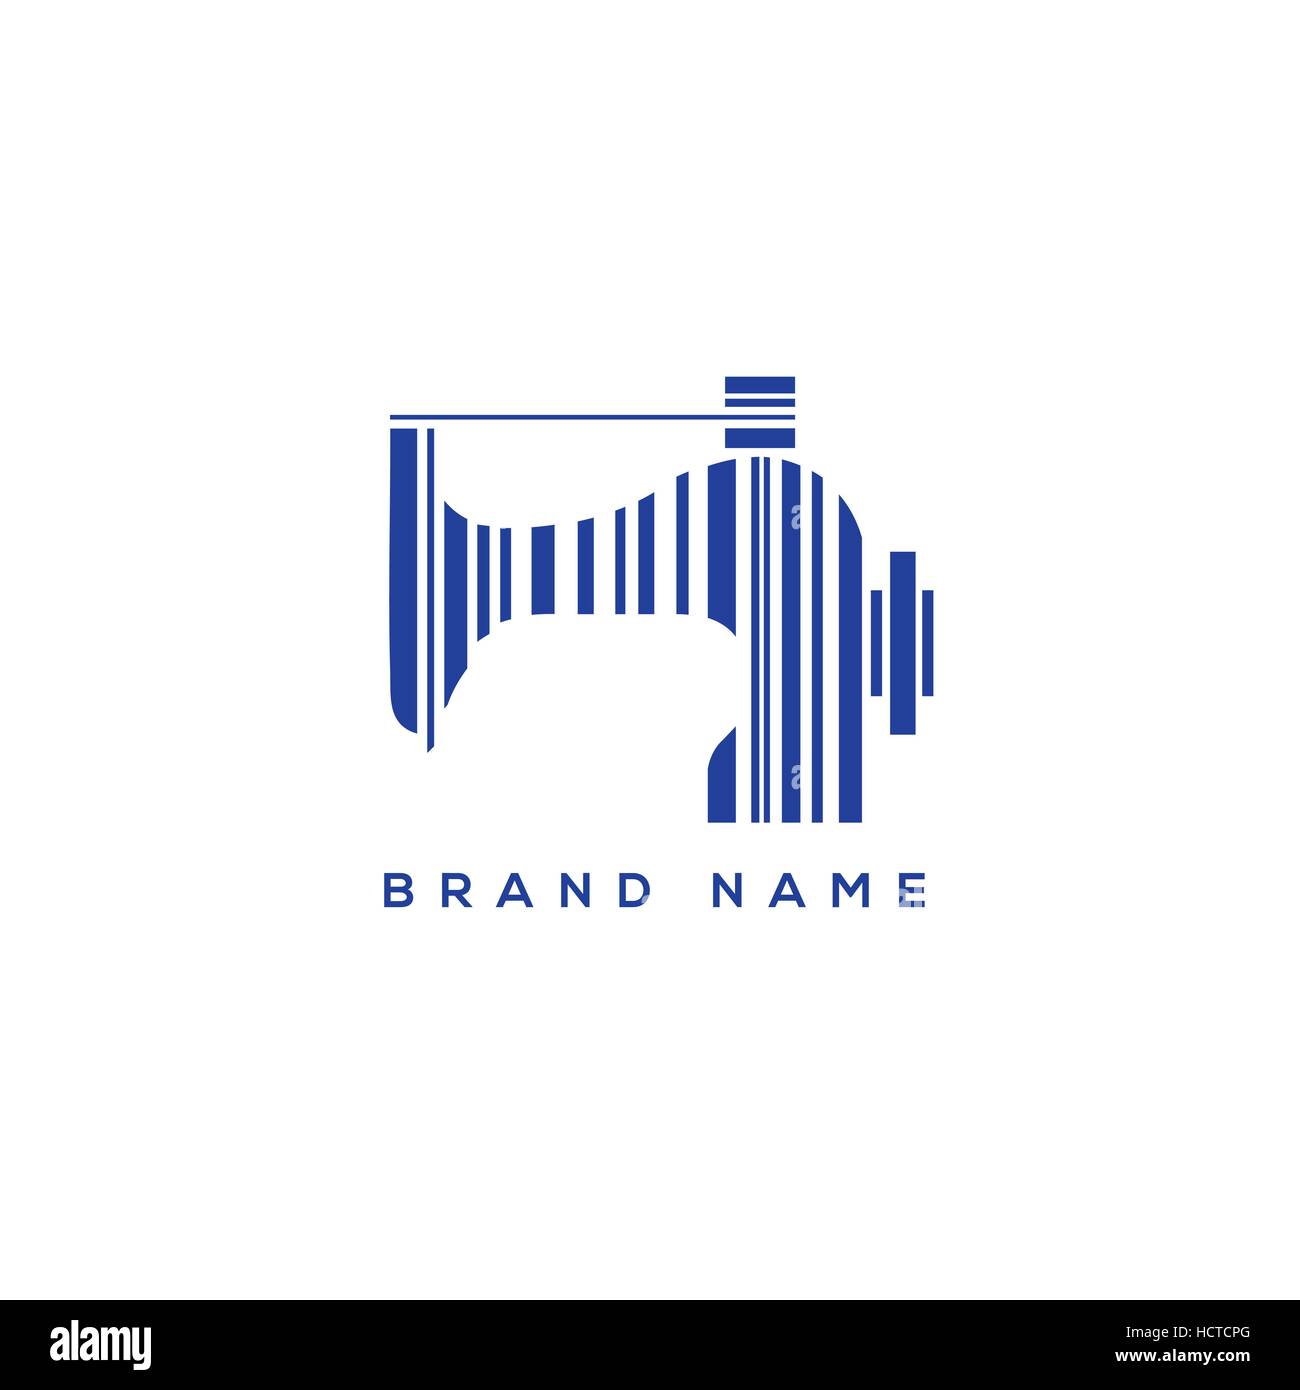 Close-up of logo for Lucky Brand apparel, San Ramon, California, November  10, 2020 Stock Photo - Alamy